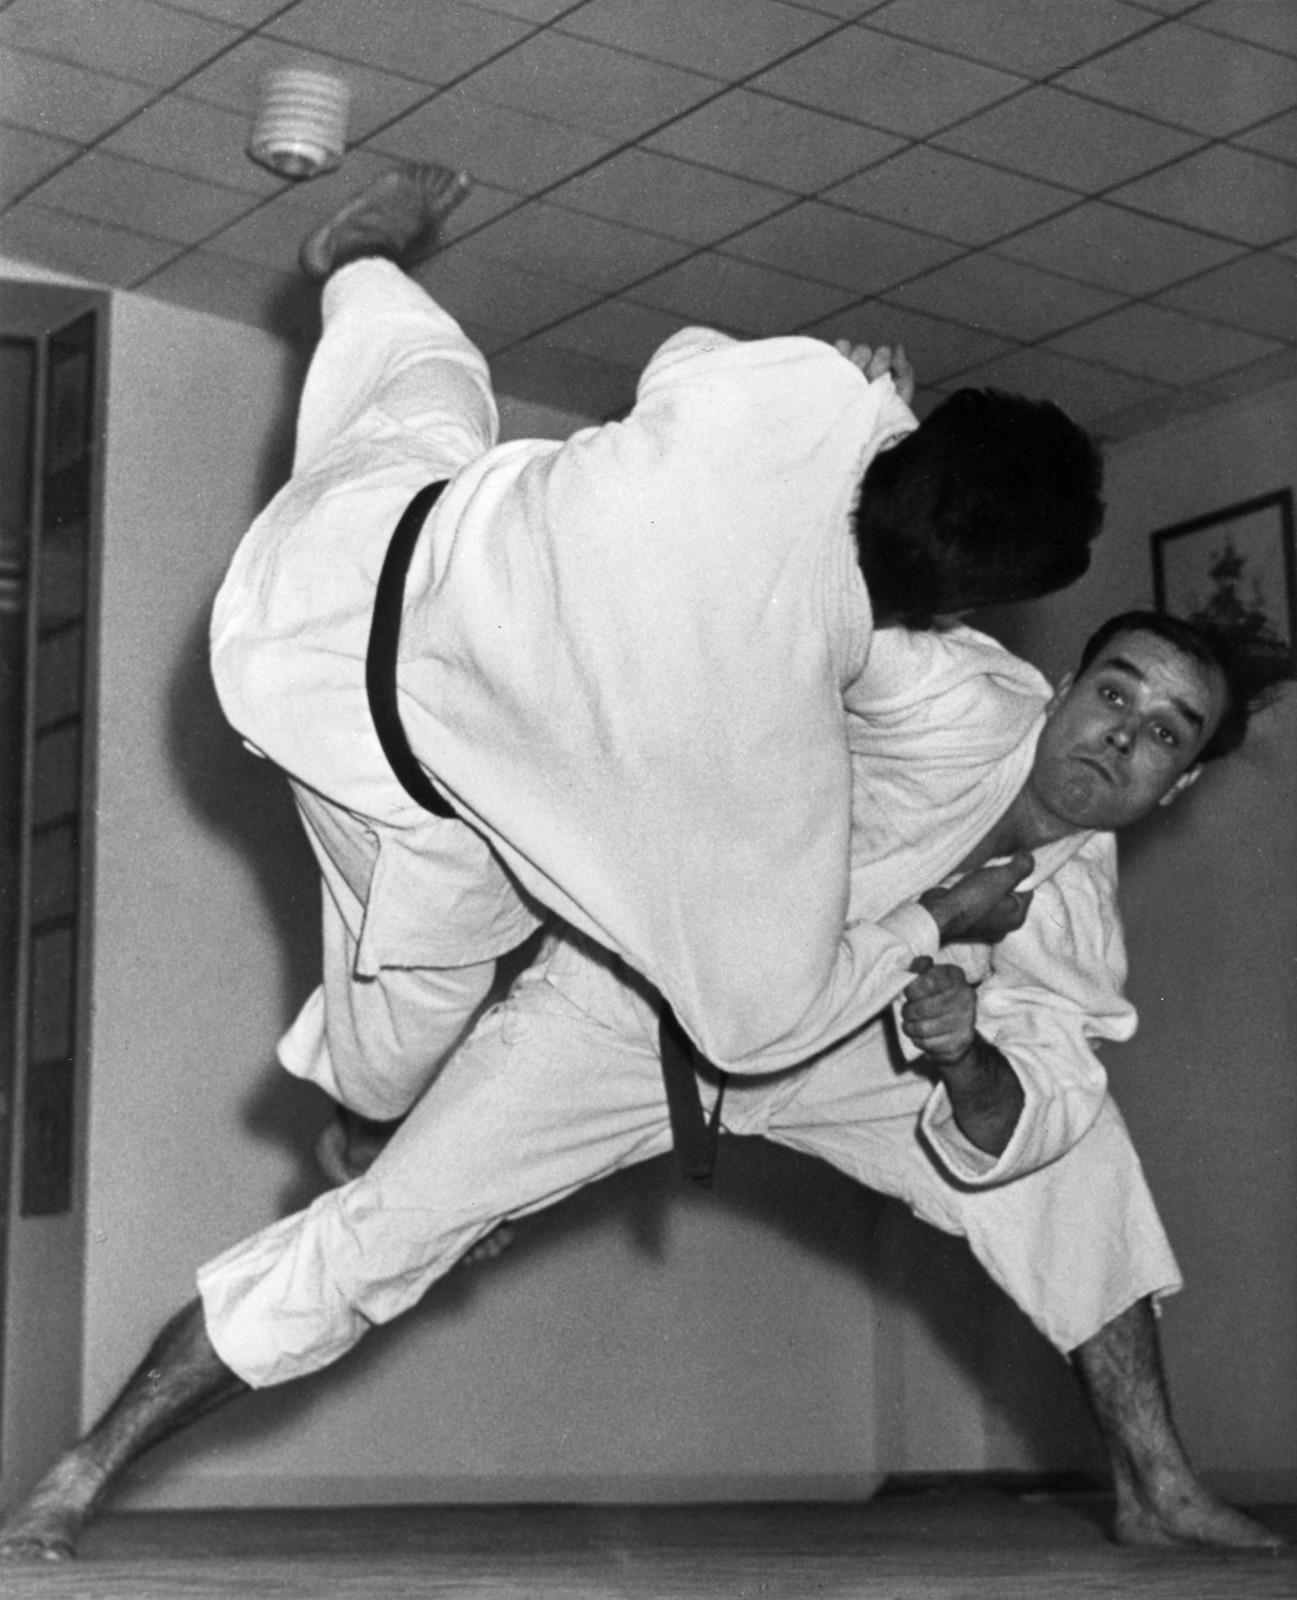 Yves Klein using Judo flips